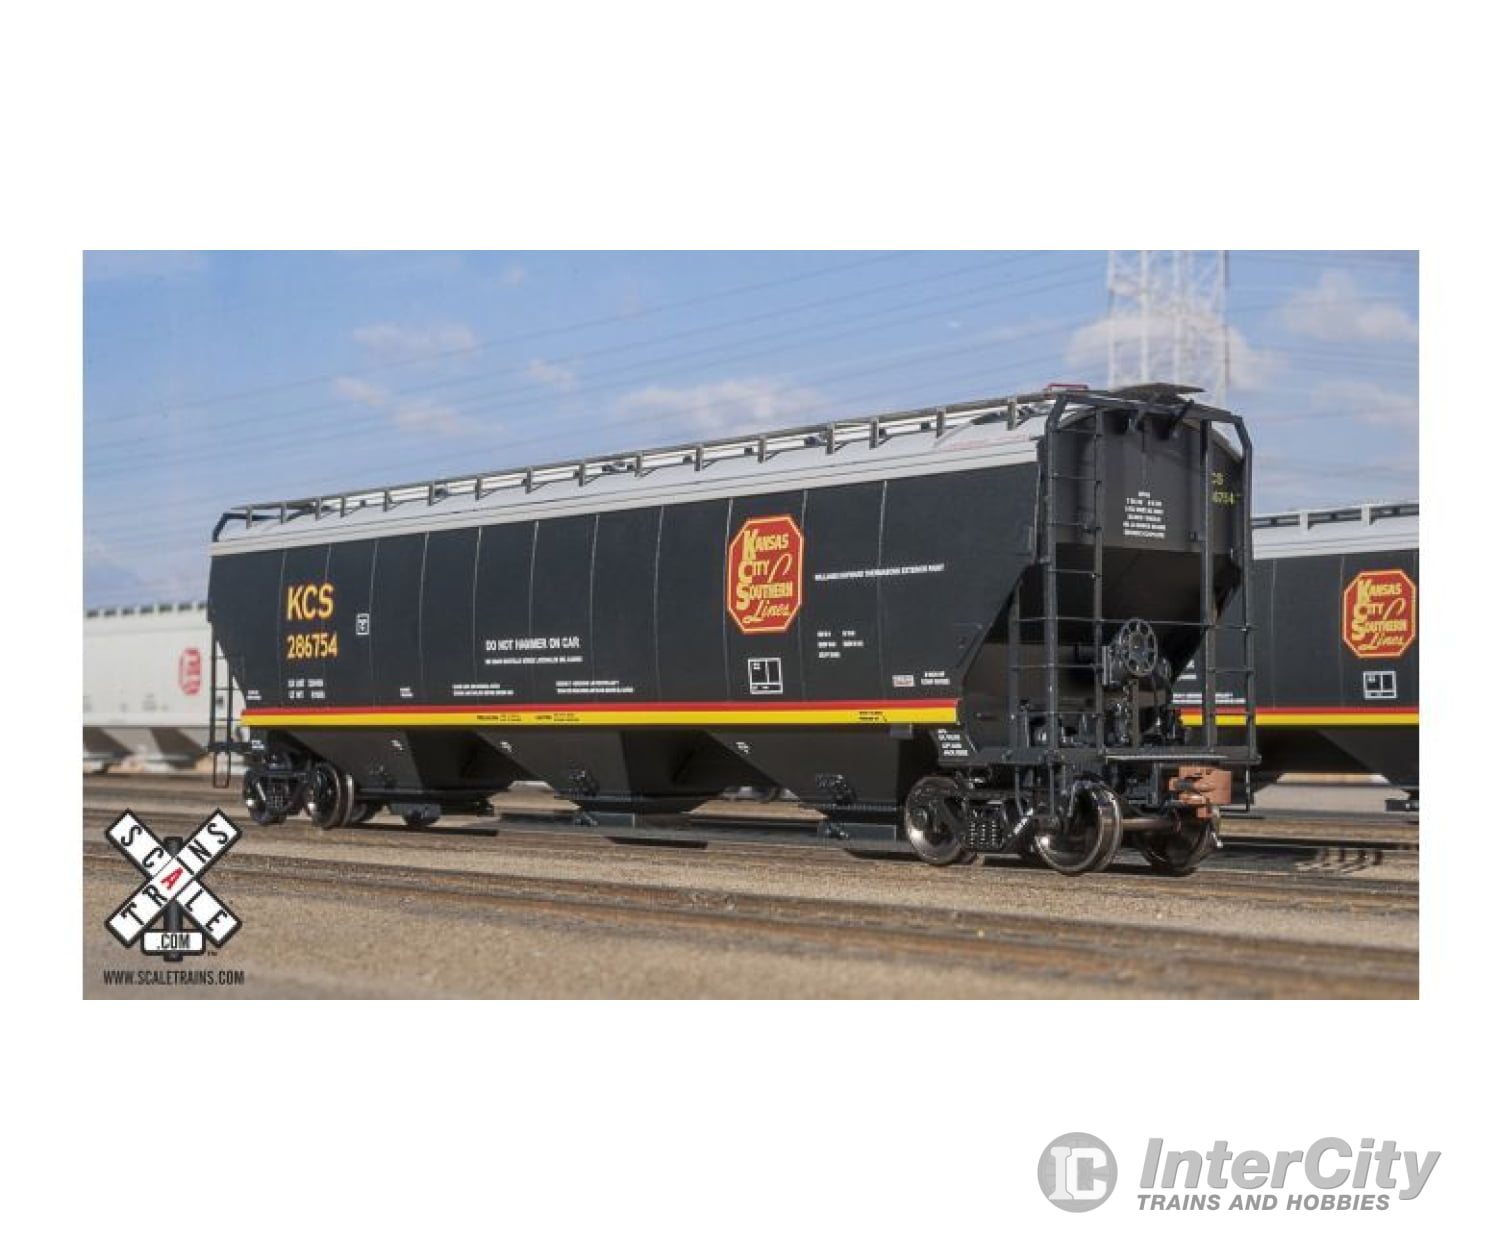 Scale Trains Sxt30441 Rivet Counter Ho Gunderson 5188 Covered Hopper Kansas City Southern/Belle